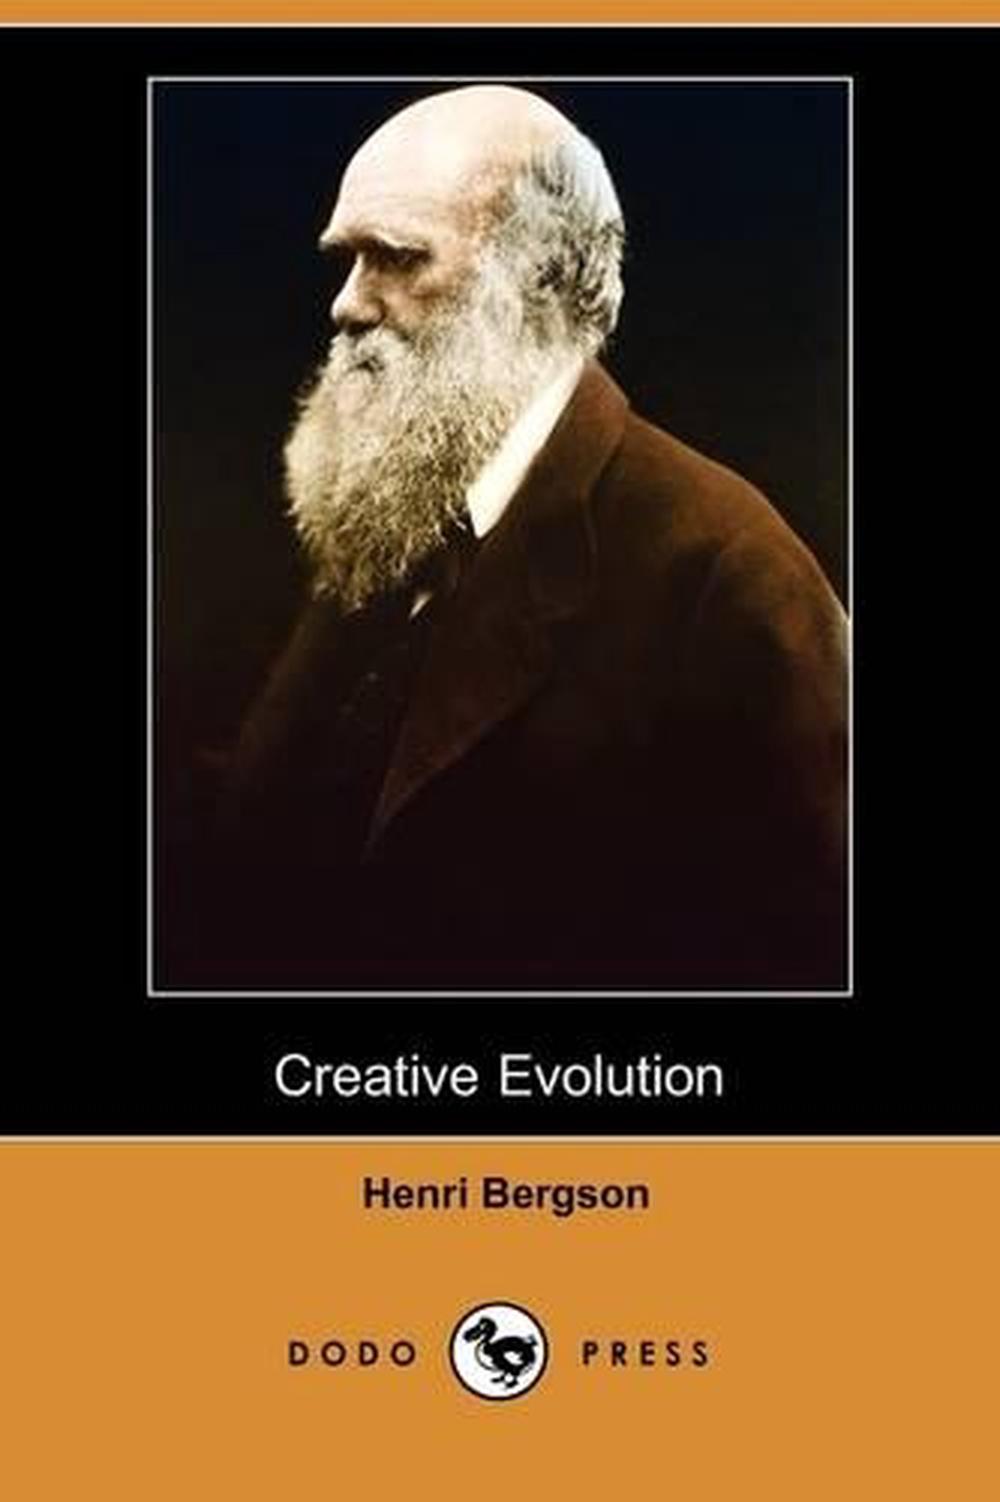 Creative Evolution by Henri Bergson